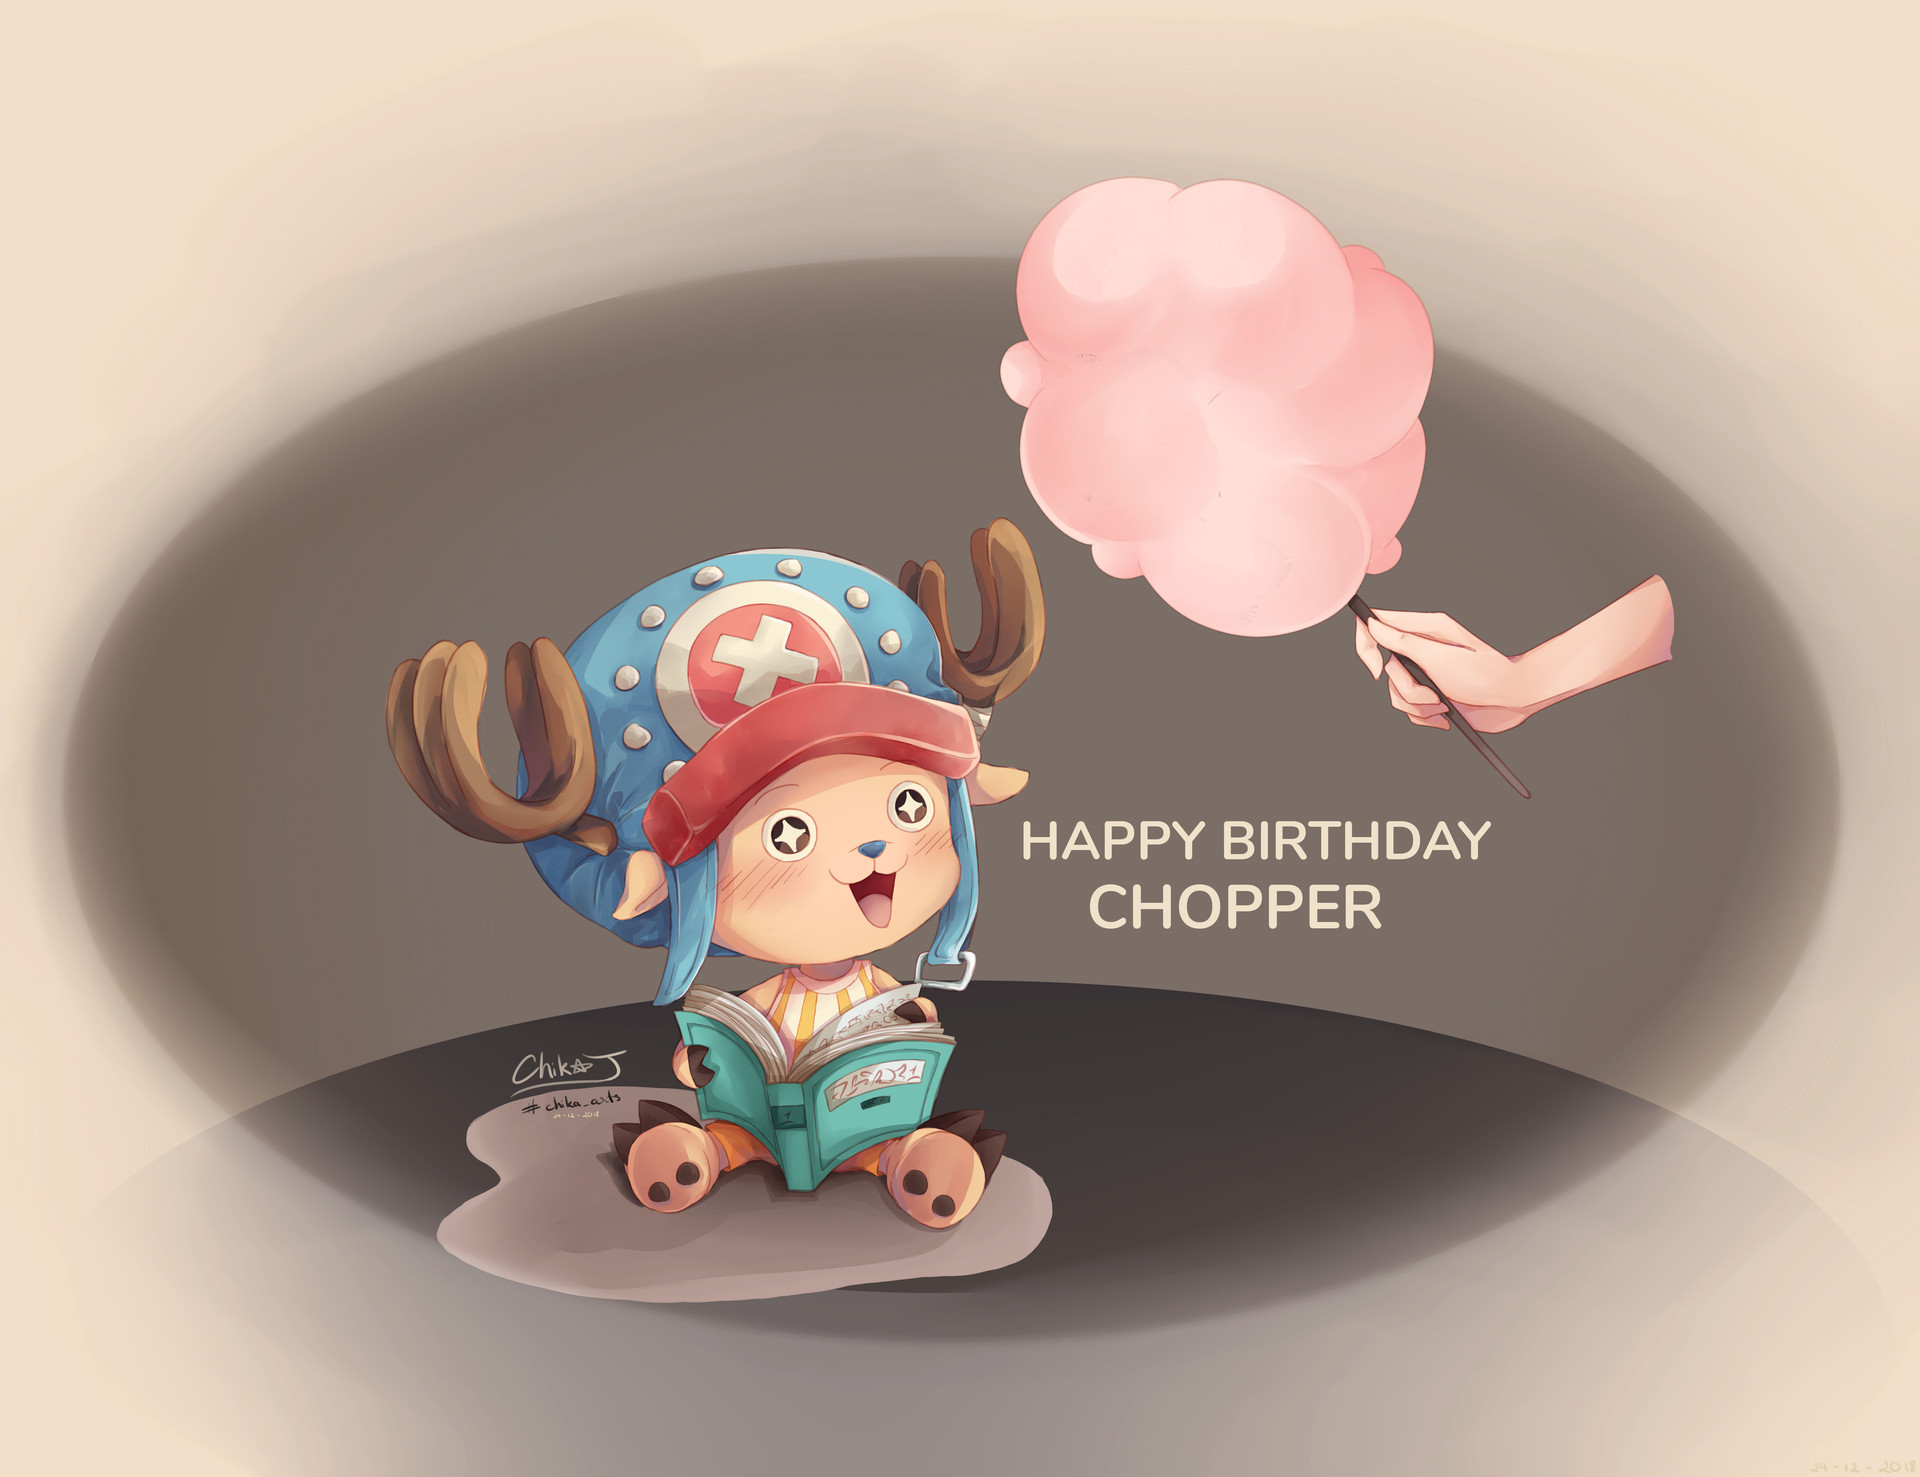 Happy Birthday Chopper!